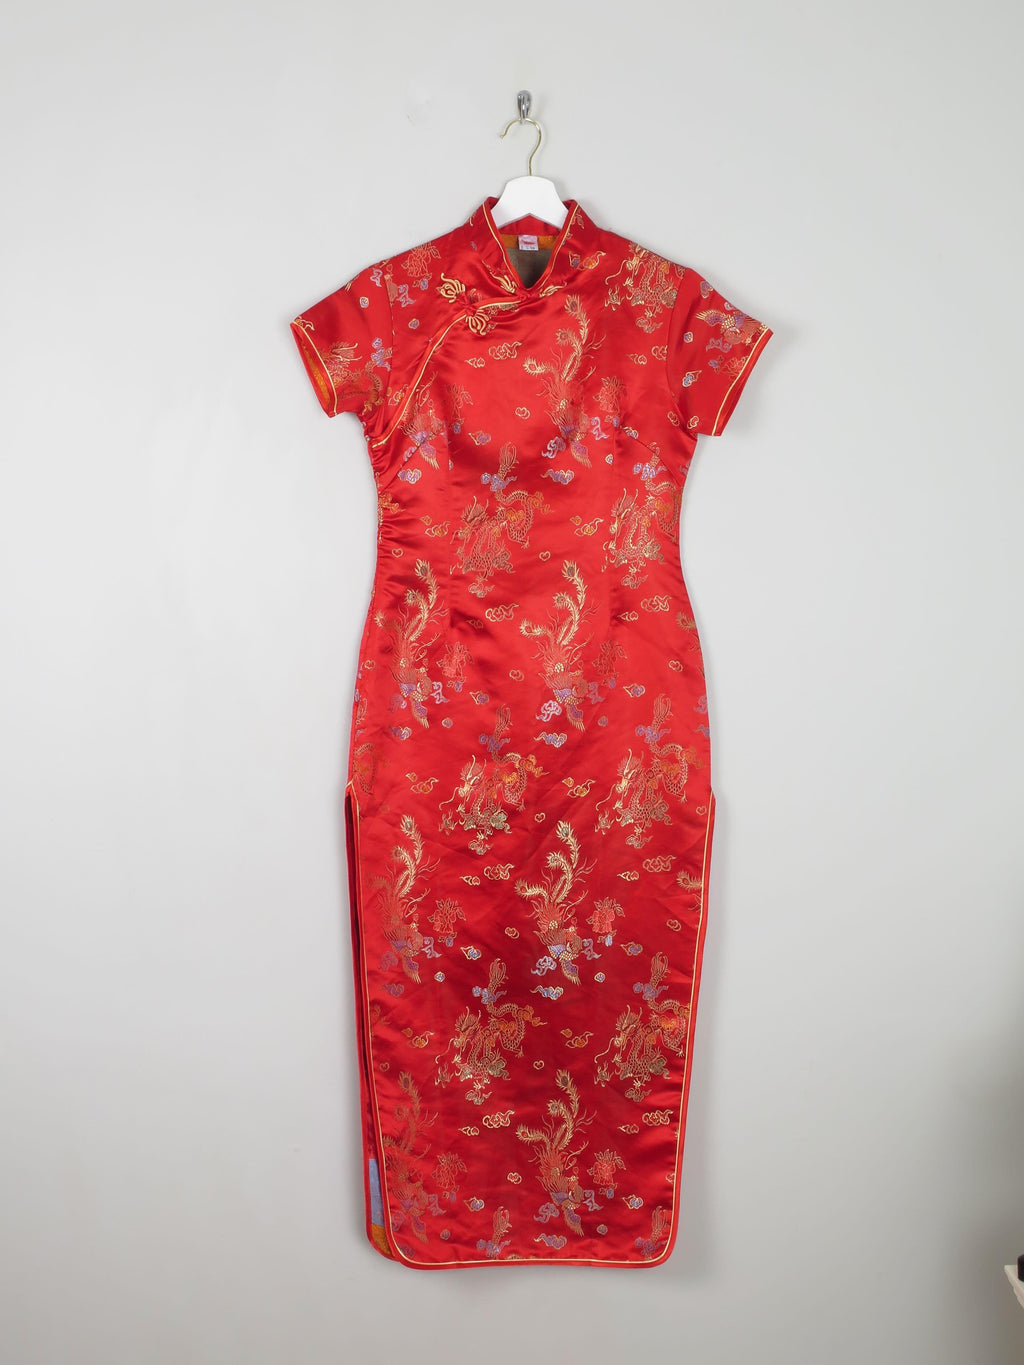 Red Silk Chinese Mandarin Vintage Dress Unworn XS 8 - The Harlequin